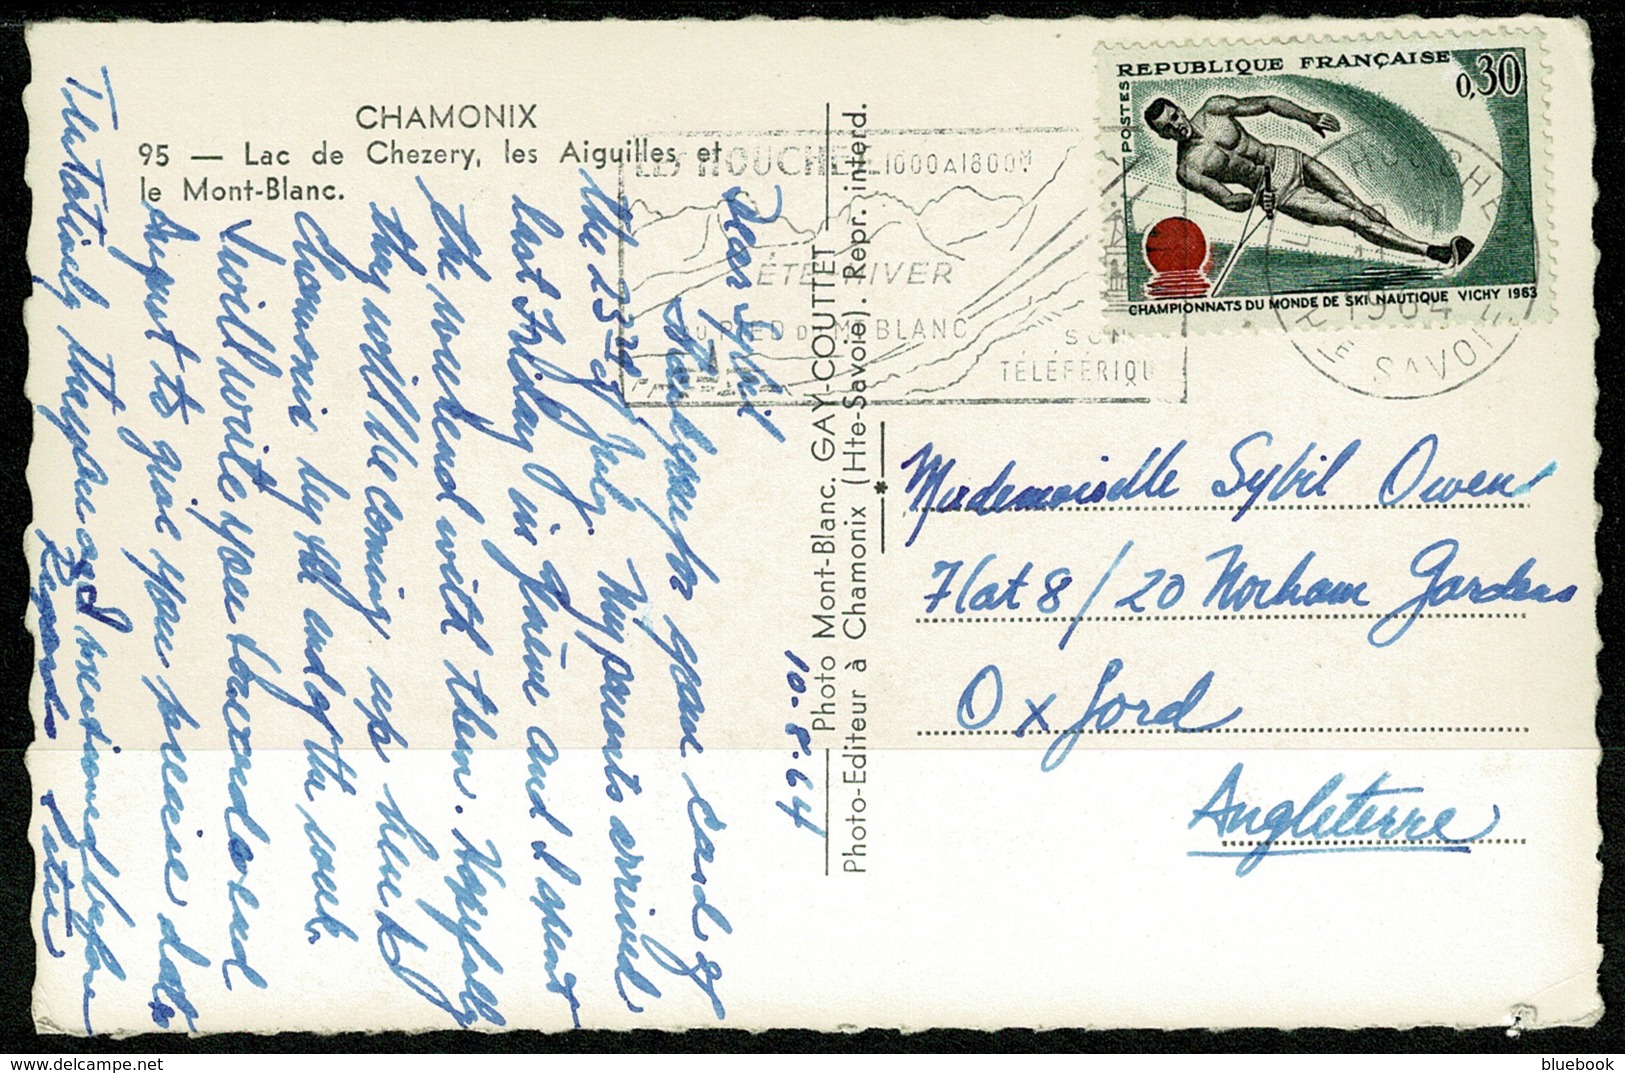 Ref 1242 - 1964 Real Photo Postcard - Chamonix France - Water Skiiing Stamp - Sport Theme - Waterski